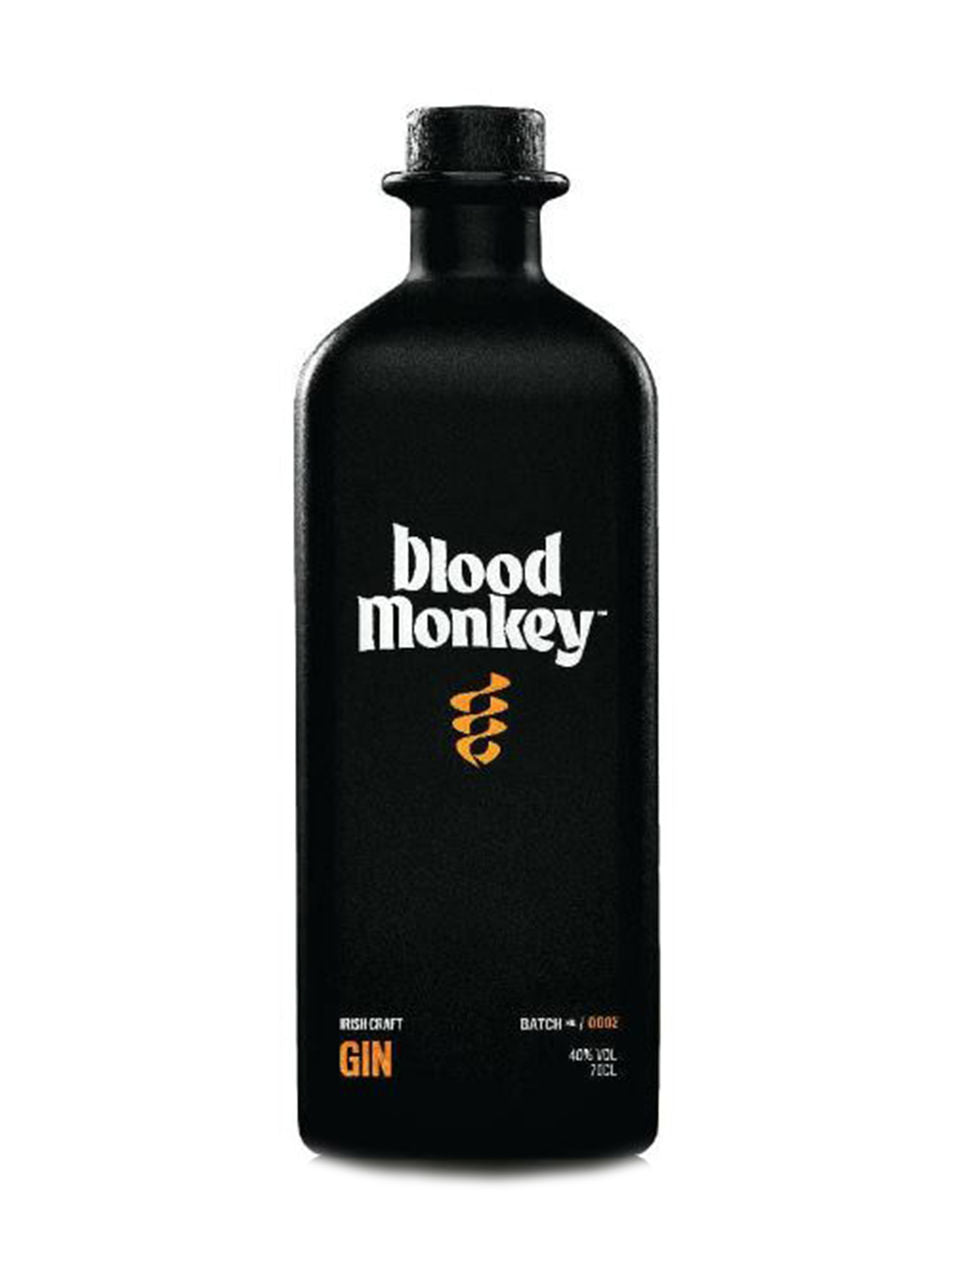 Blood Monkey Irish Gin 700 ml bottle